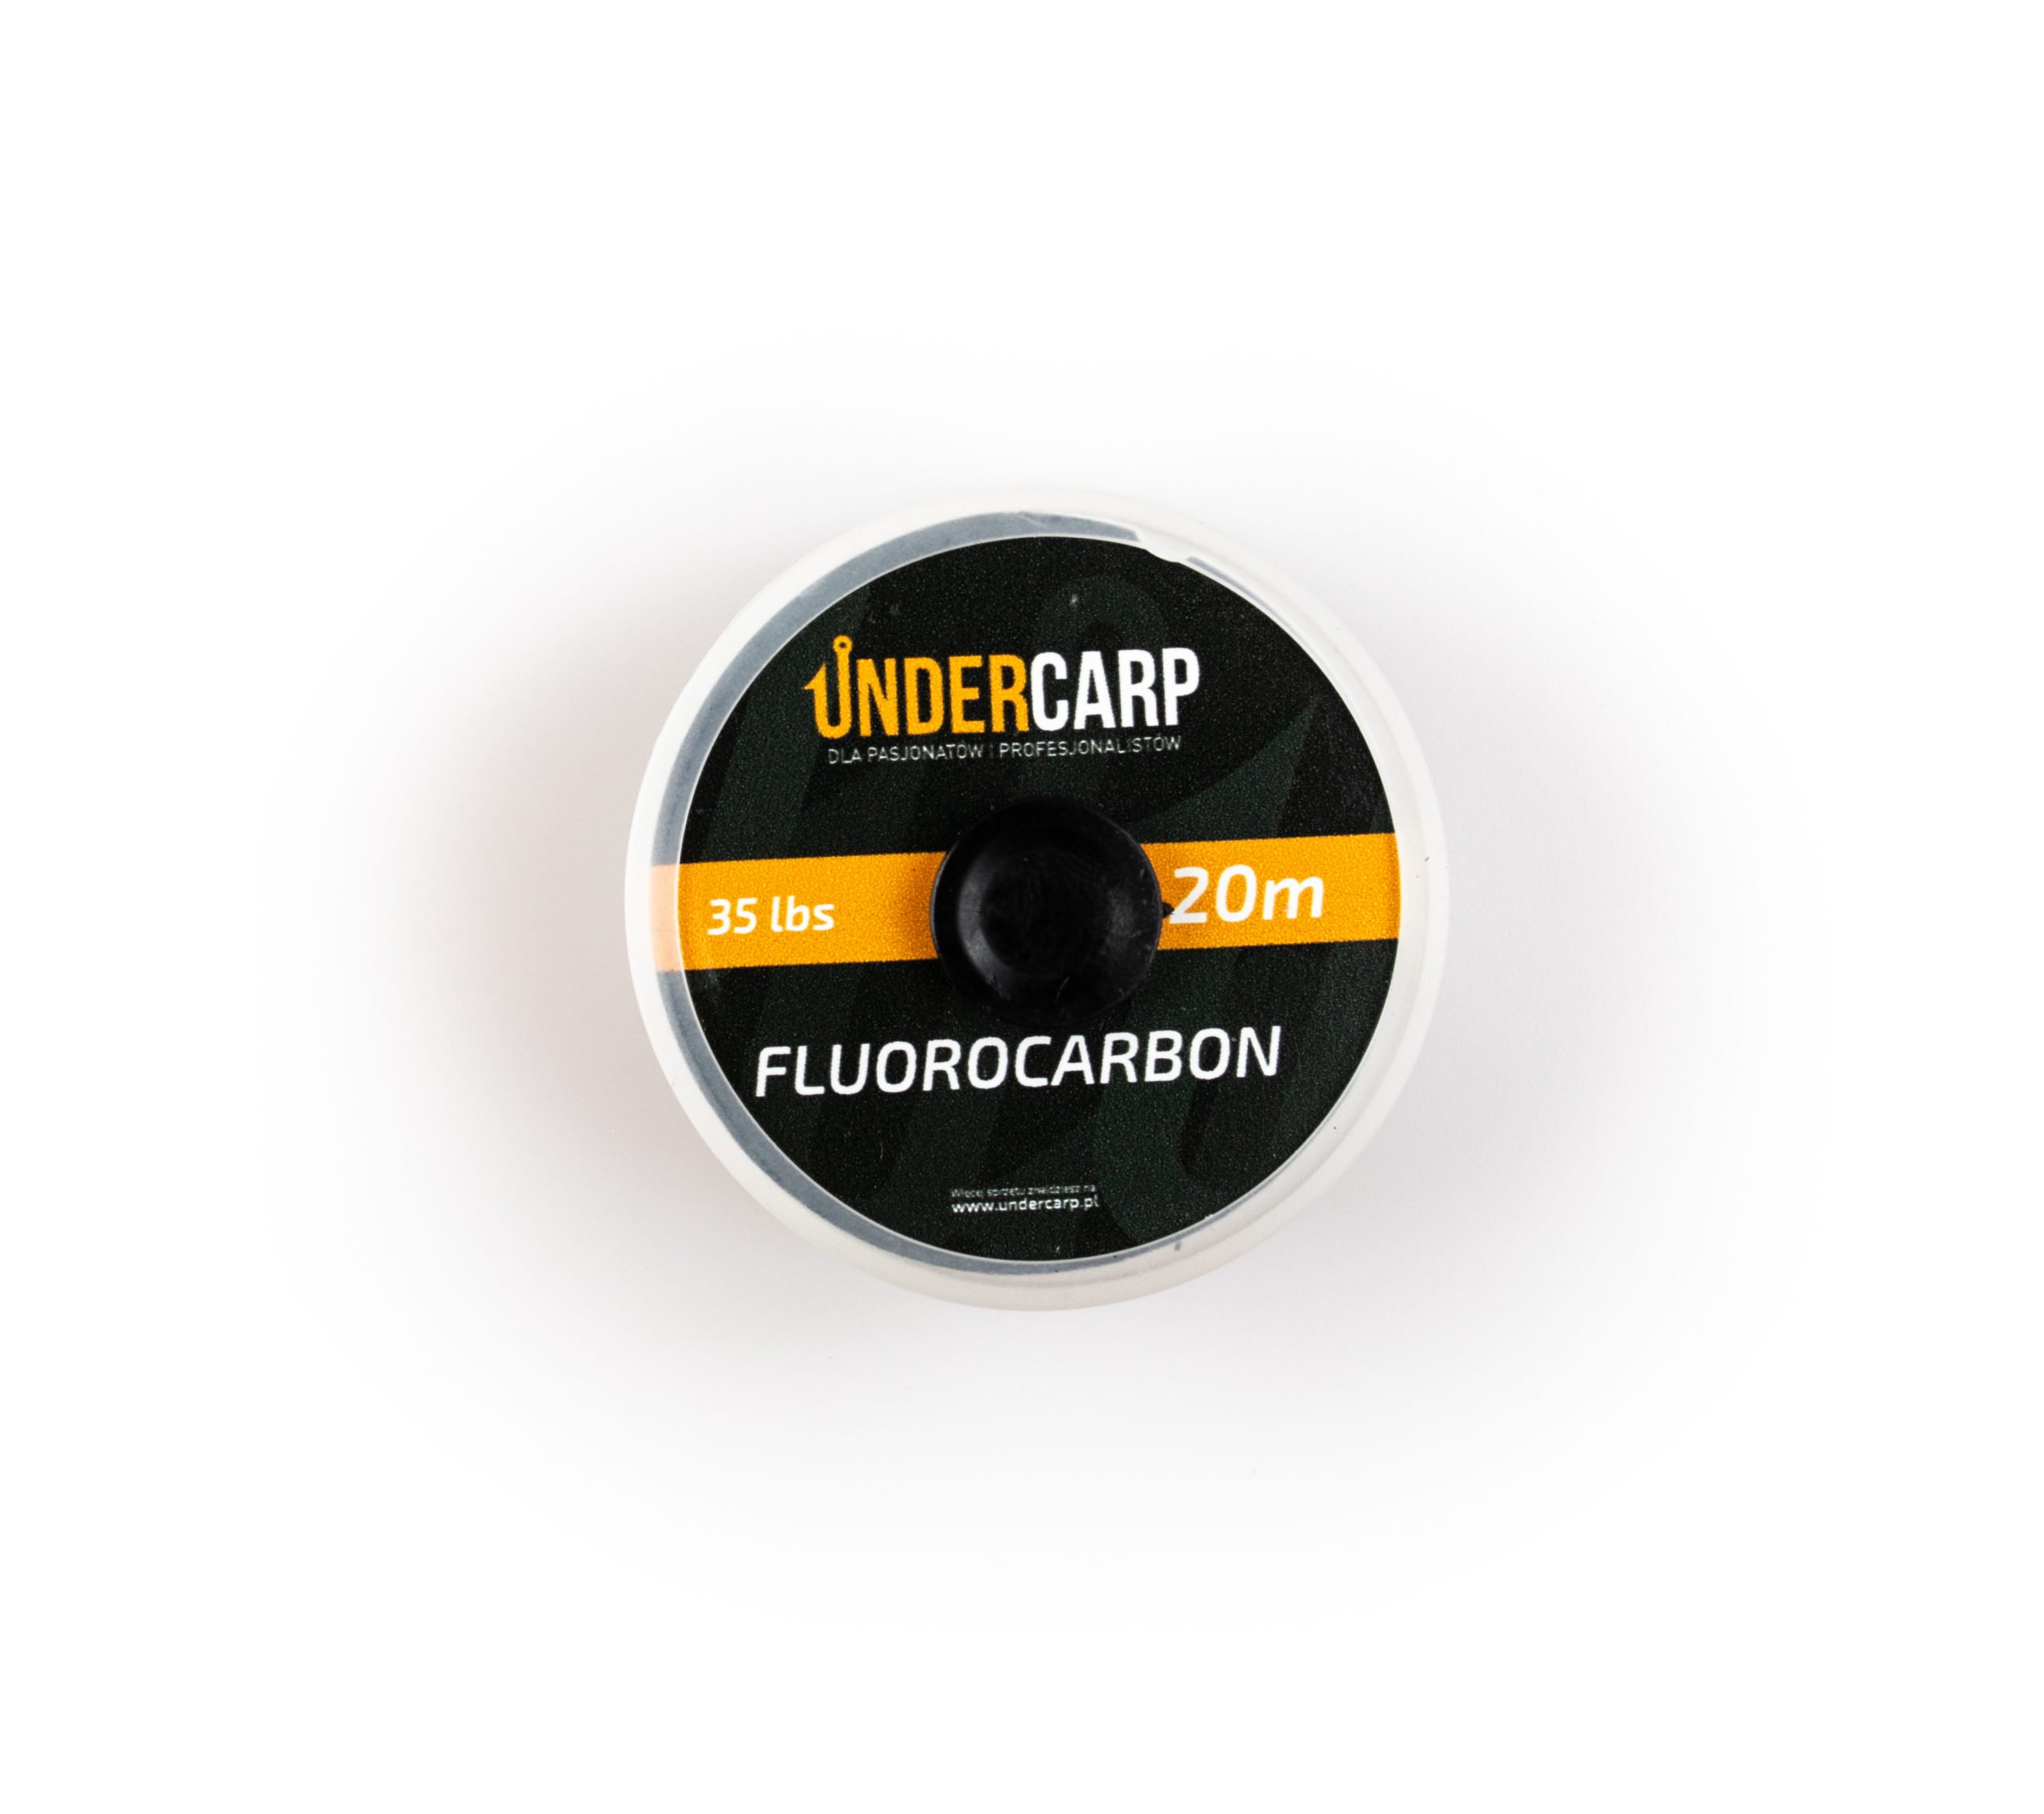 UnderCarp Fluorocarbon 35 lbs / 20 m